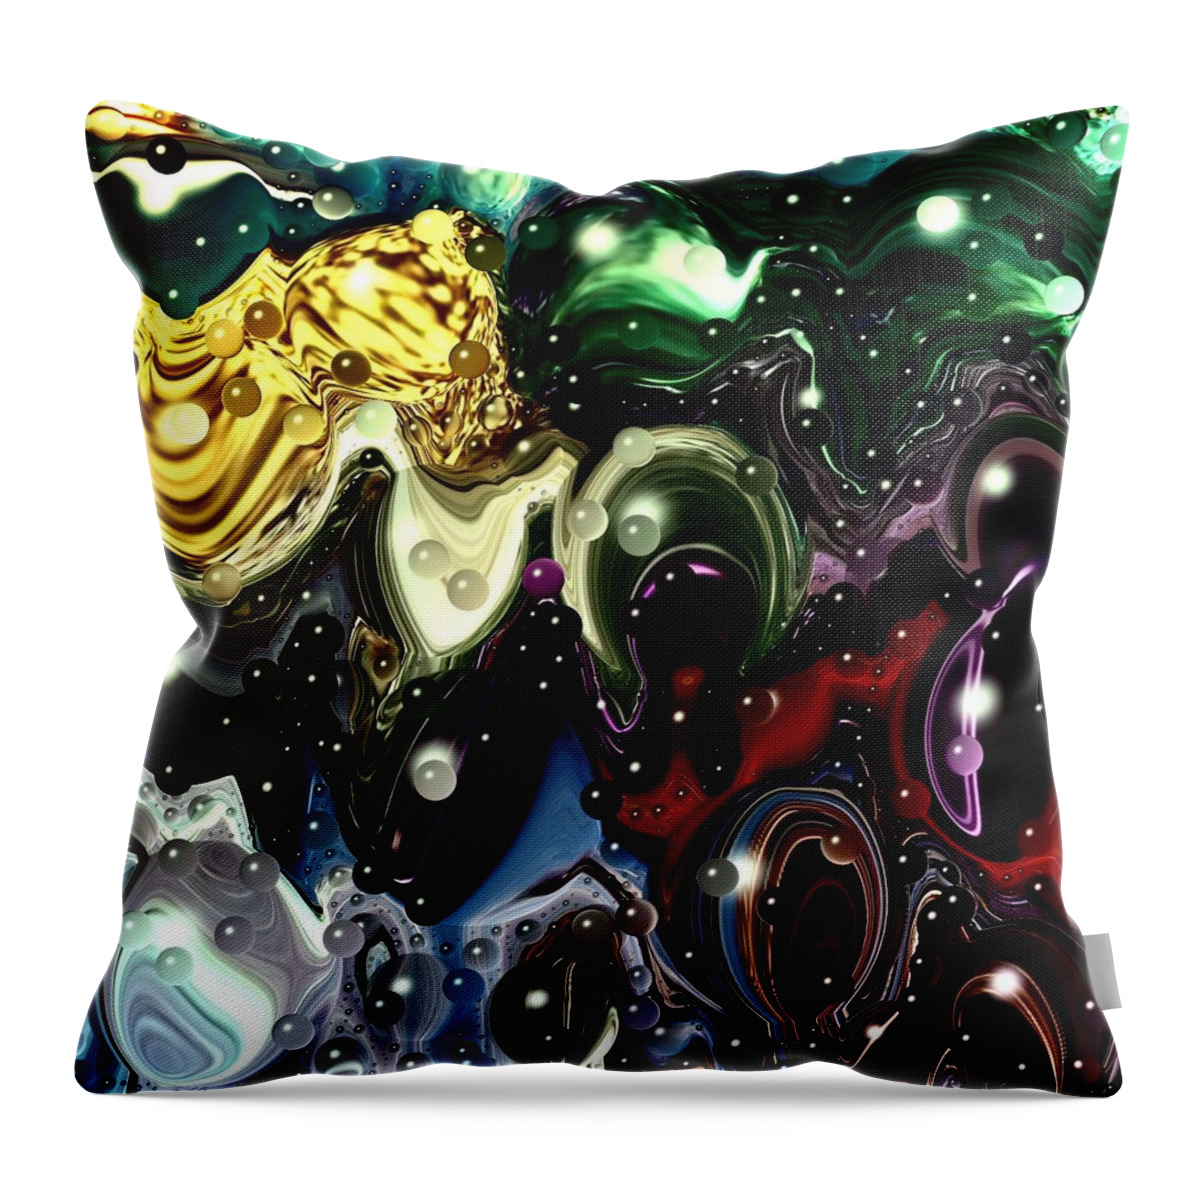 Digital Art Throw Pillow featuring the digital art Abstract 623165 by Belinda Cox